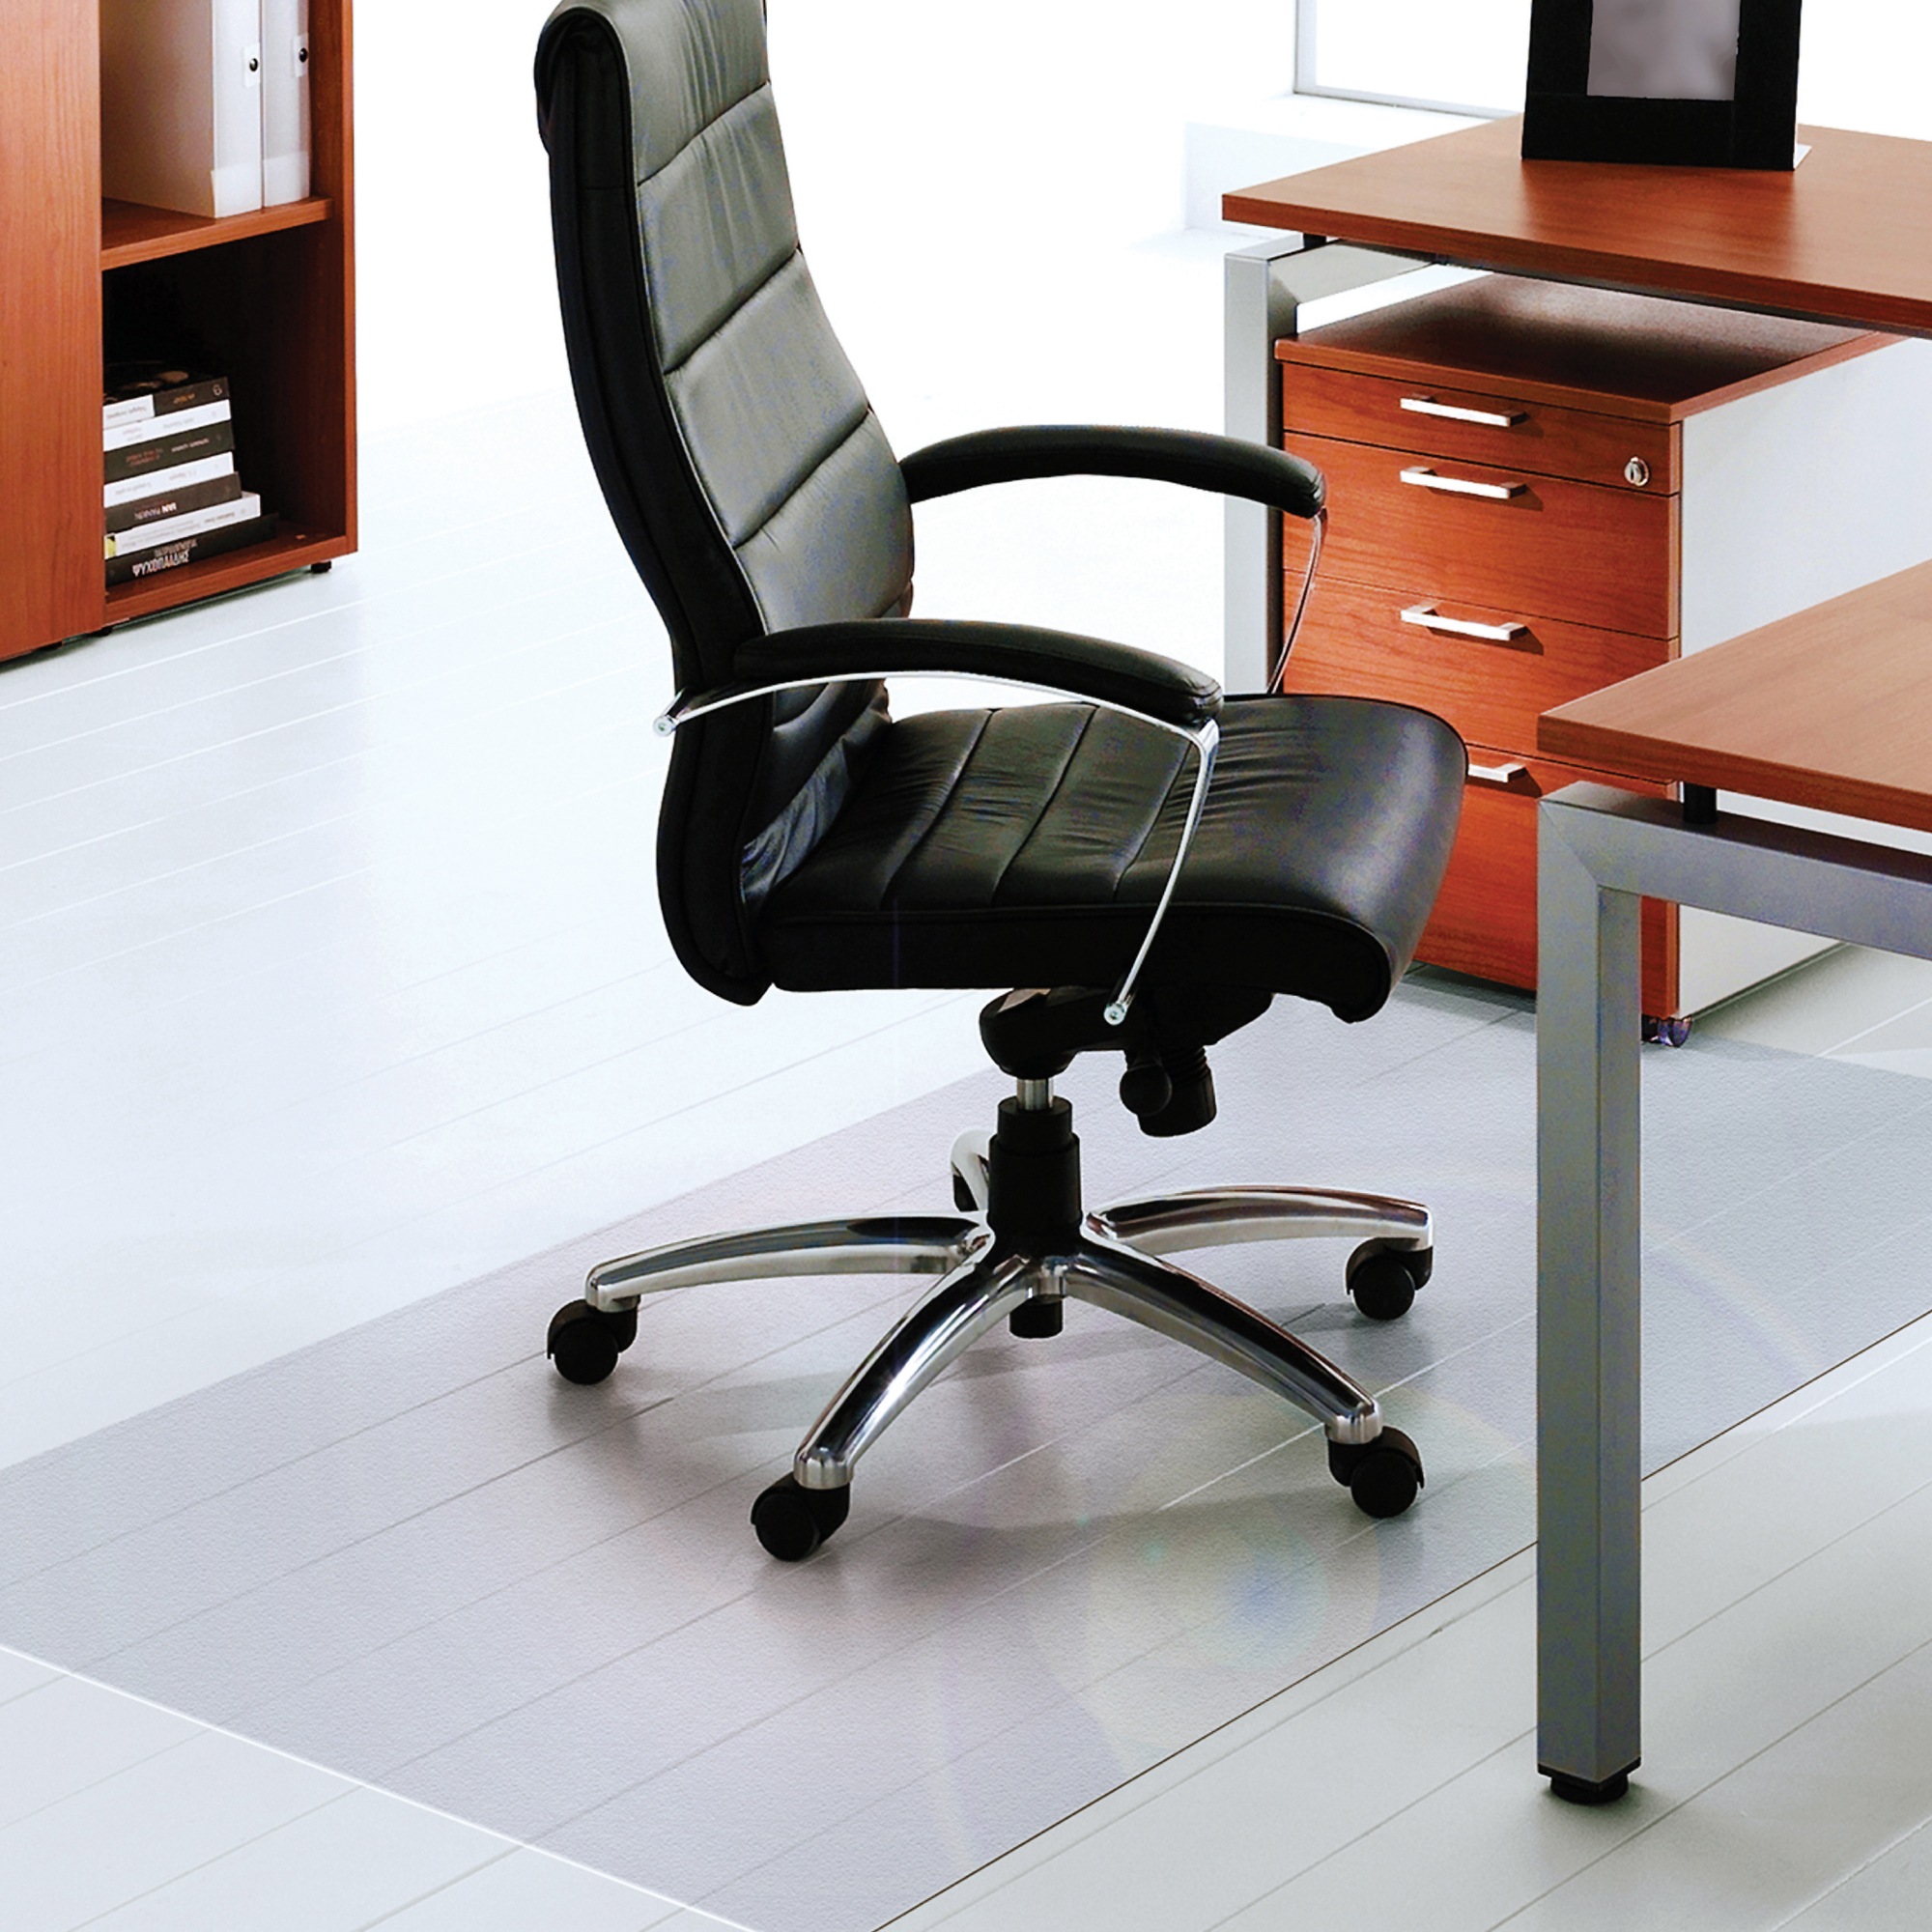 FLOORTEX Ultimat , Ultimat XXL Chair Mat Hard Floors - 71Inch x 79Inch, Length 79 in, Width 71 in, Material Plastic, Model FR1218020019ER